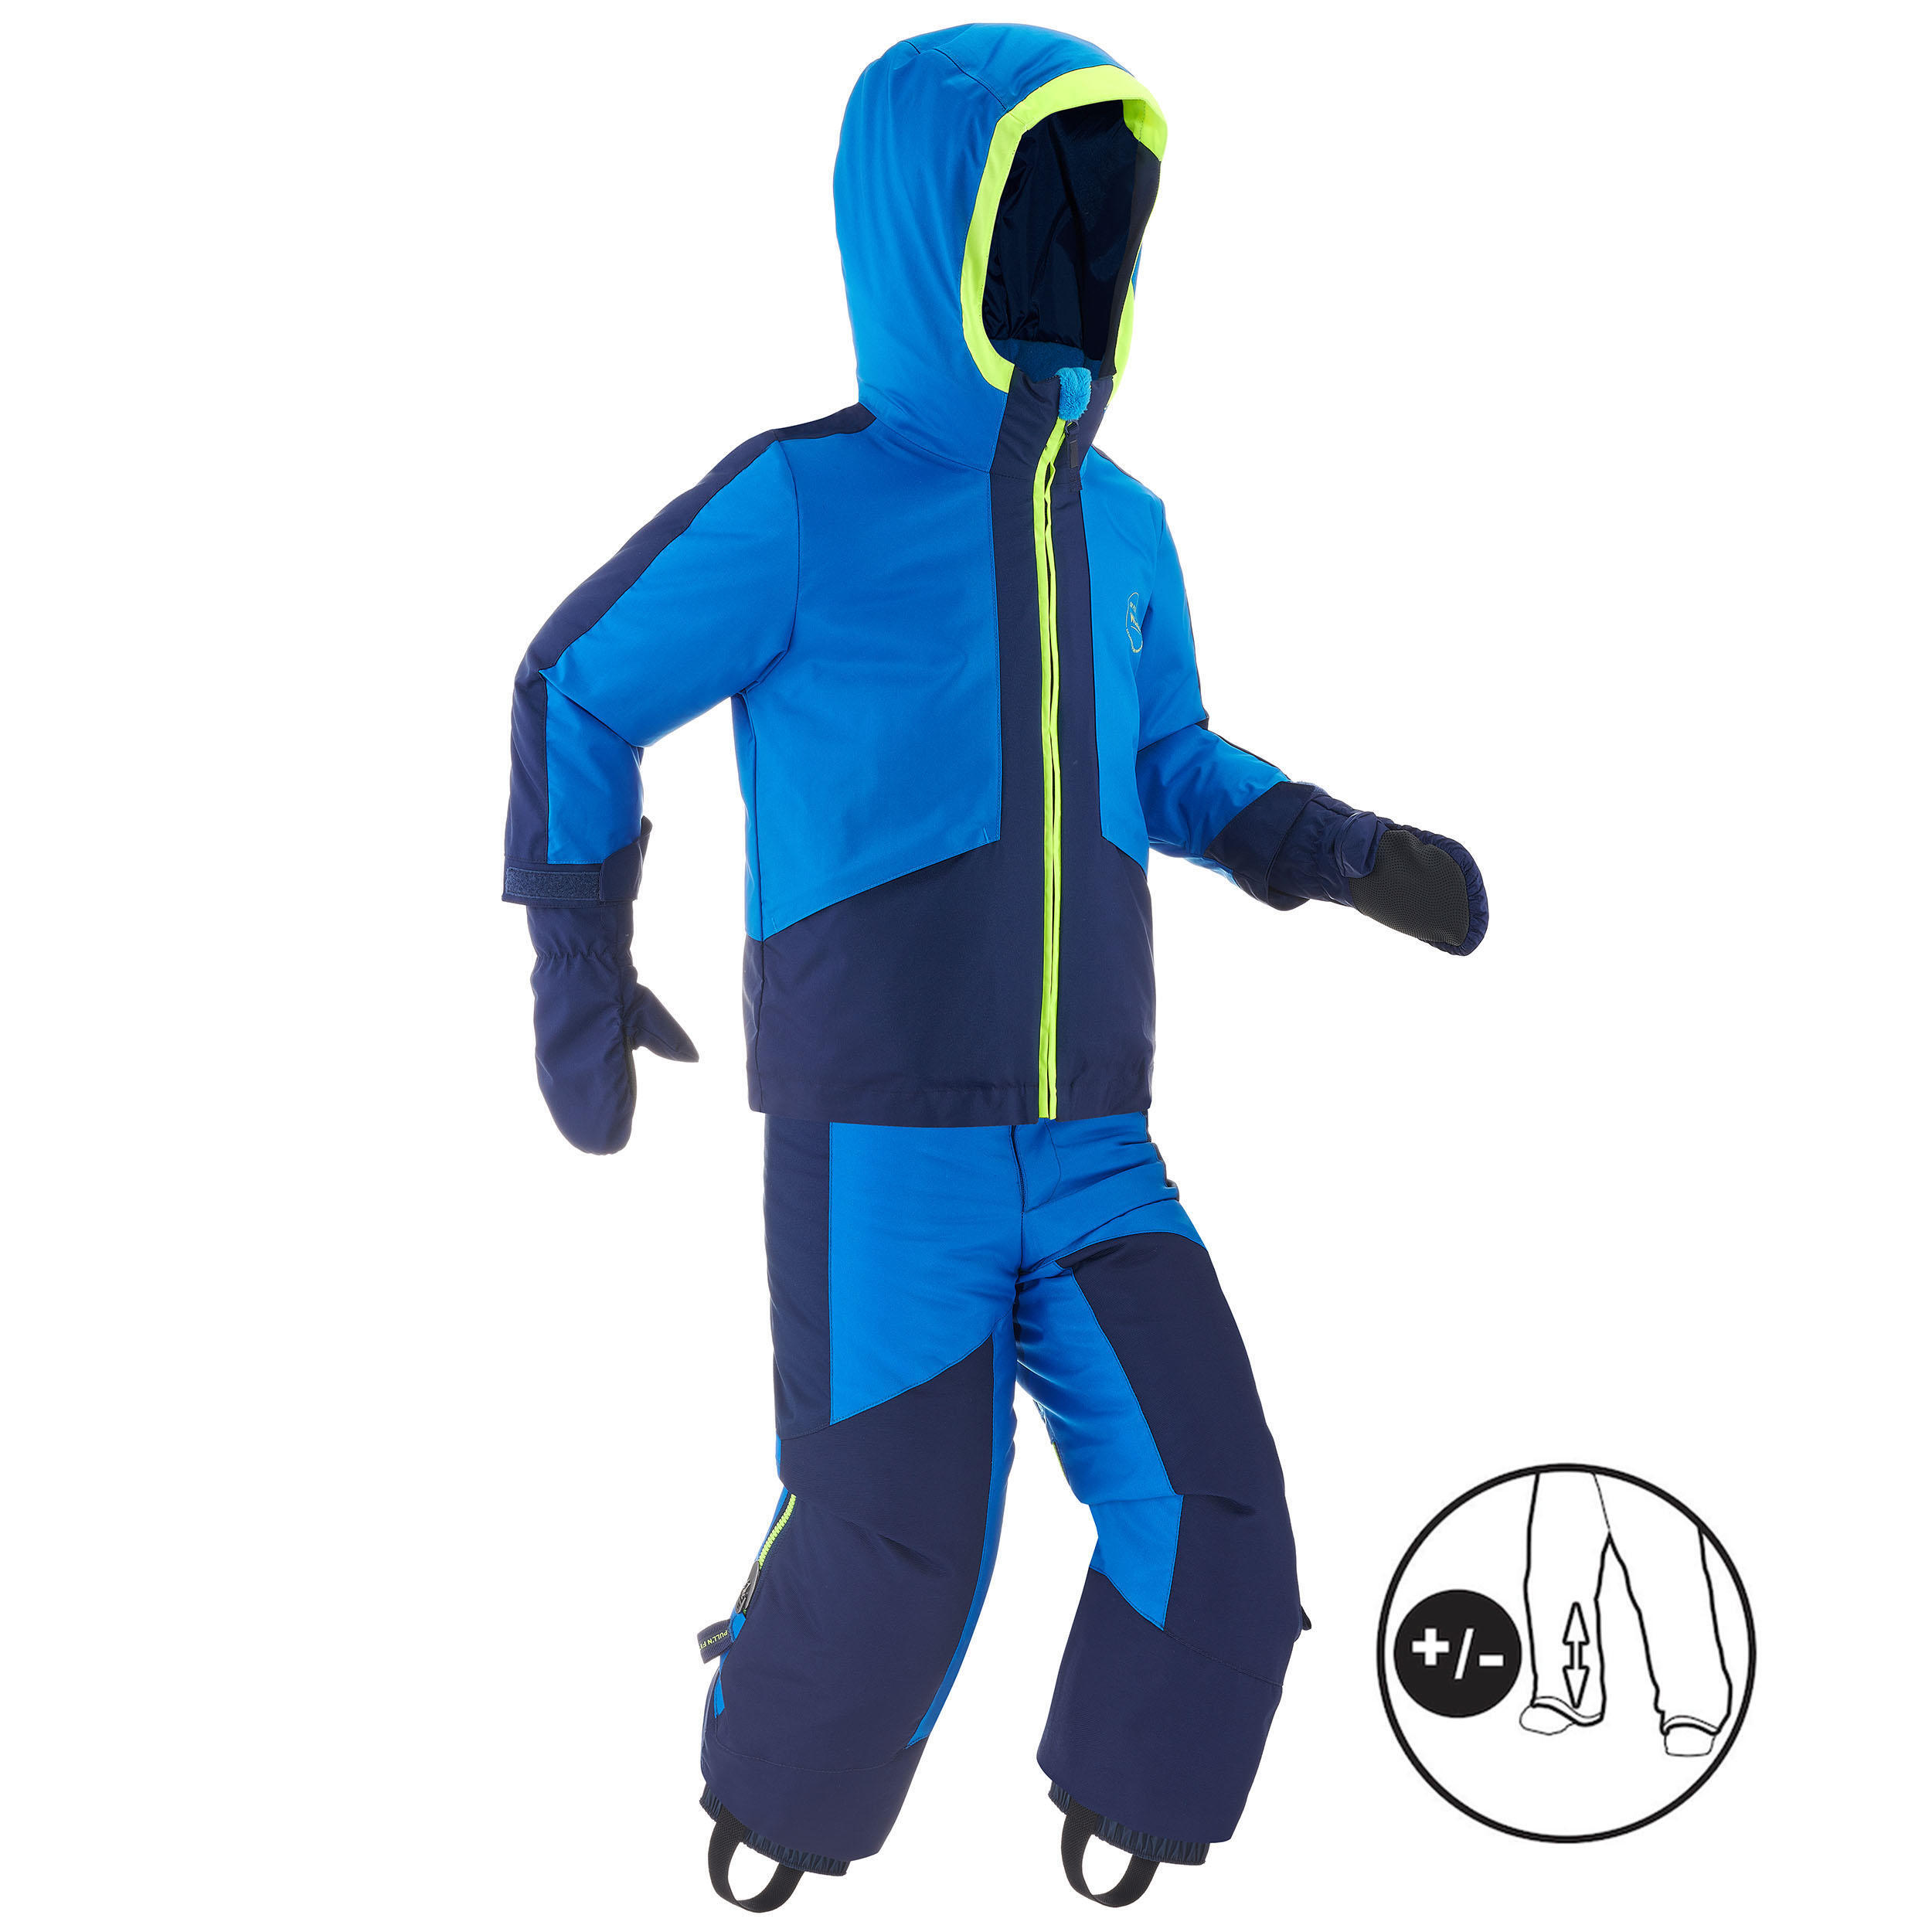 Kids’ Warm and Waterproof Ski Suit 580 - Blue 1/19